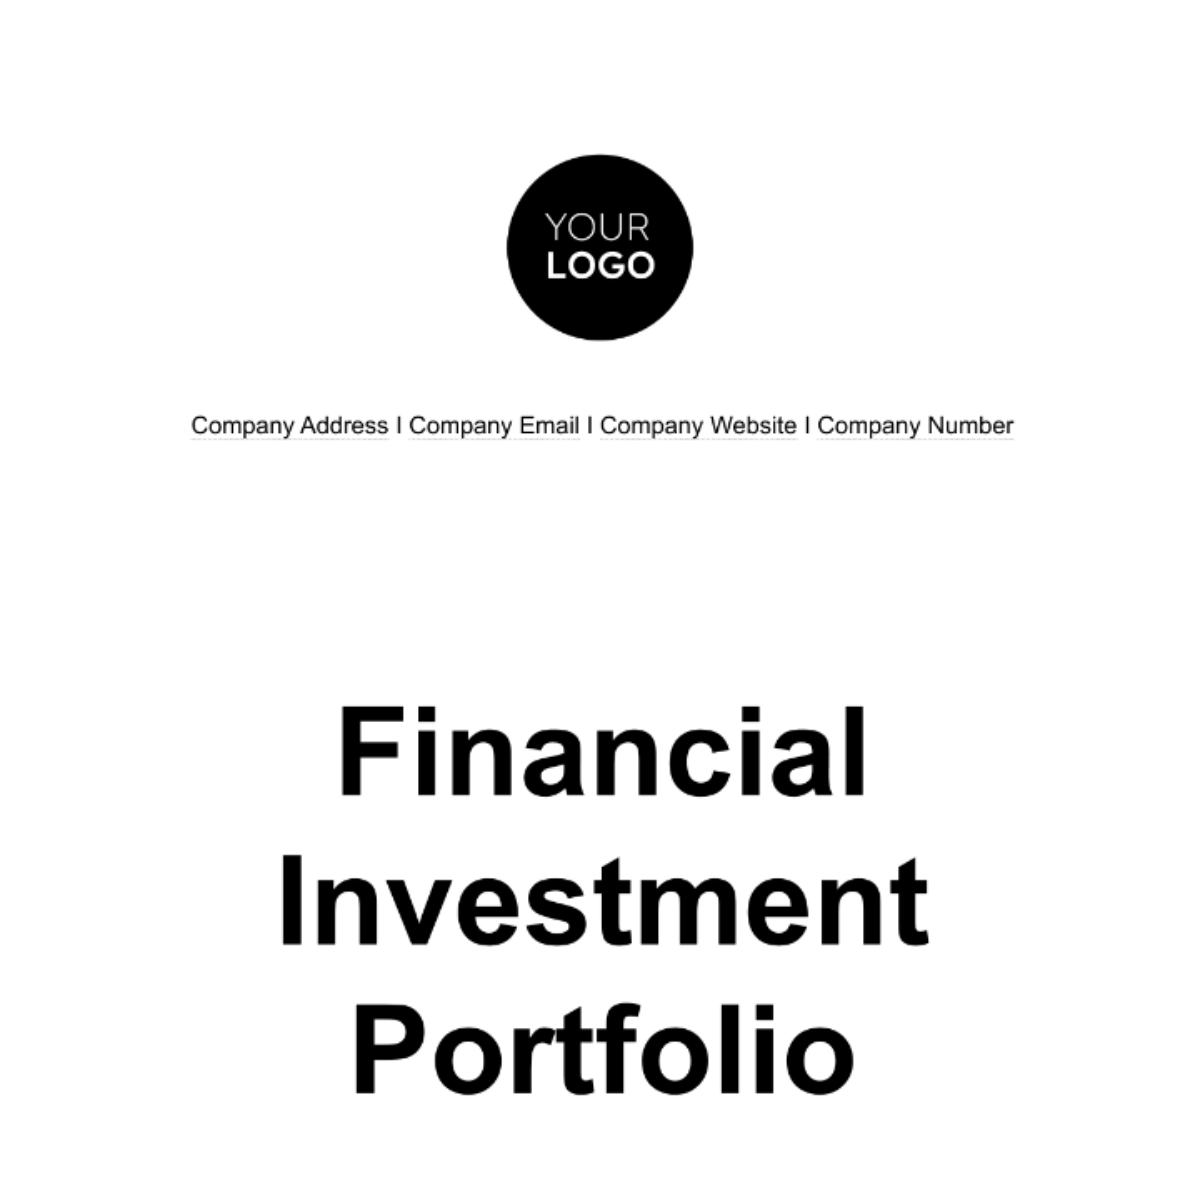 Financial Investment Portfolio Template